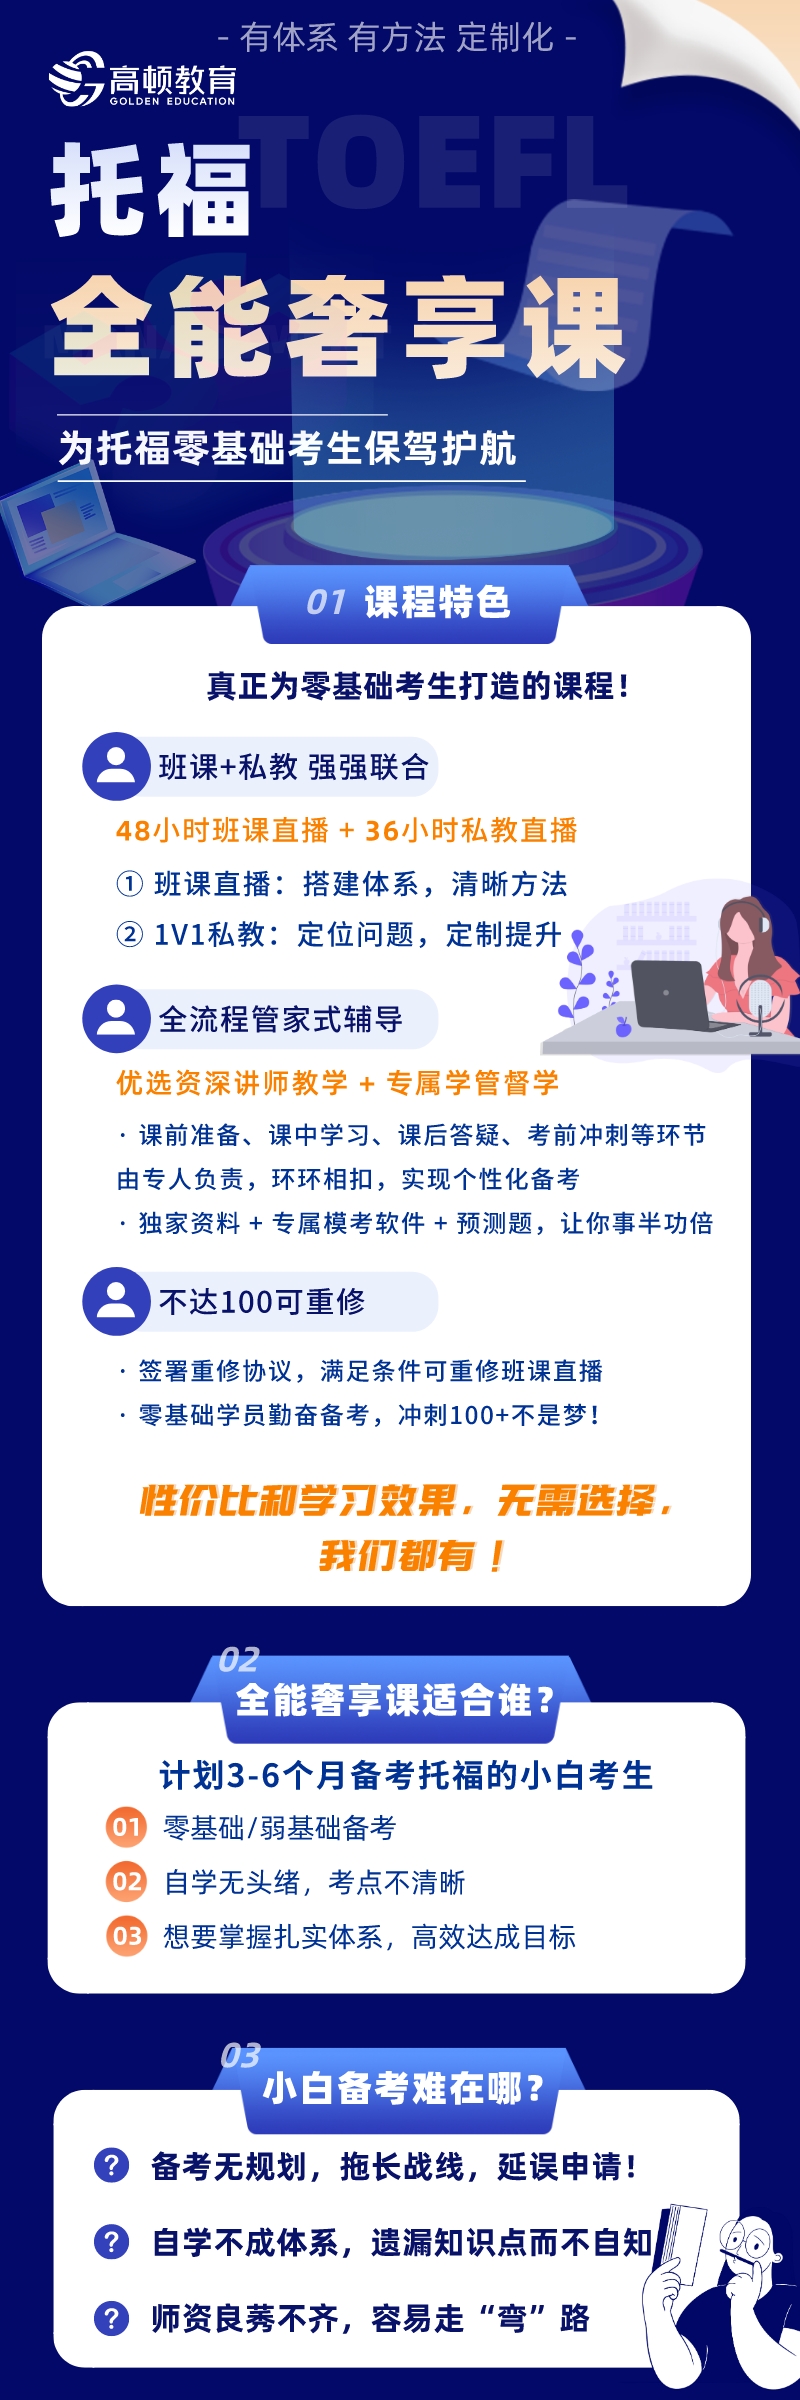 https://simg01.gaodunwangxiao.com/uploadfiles/product-center/202303/14/ec007_20230314105708.jpeg